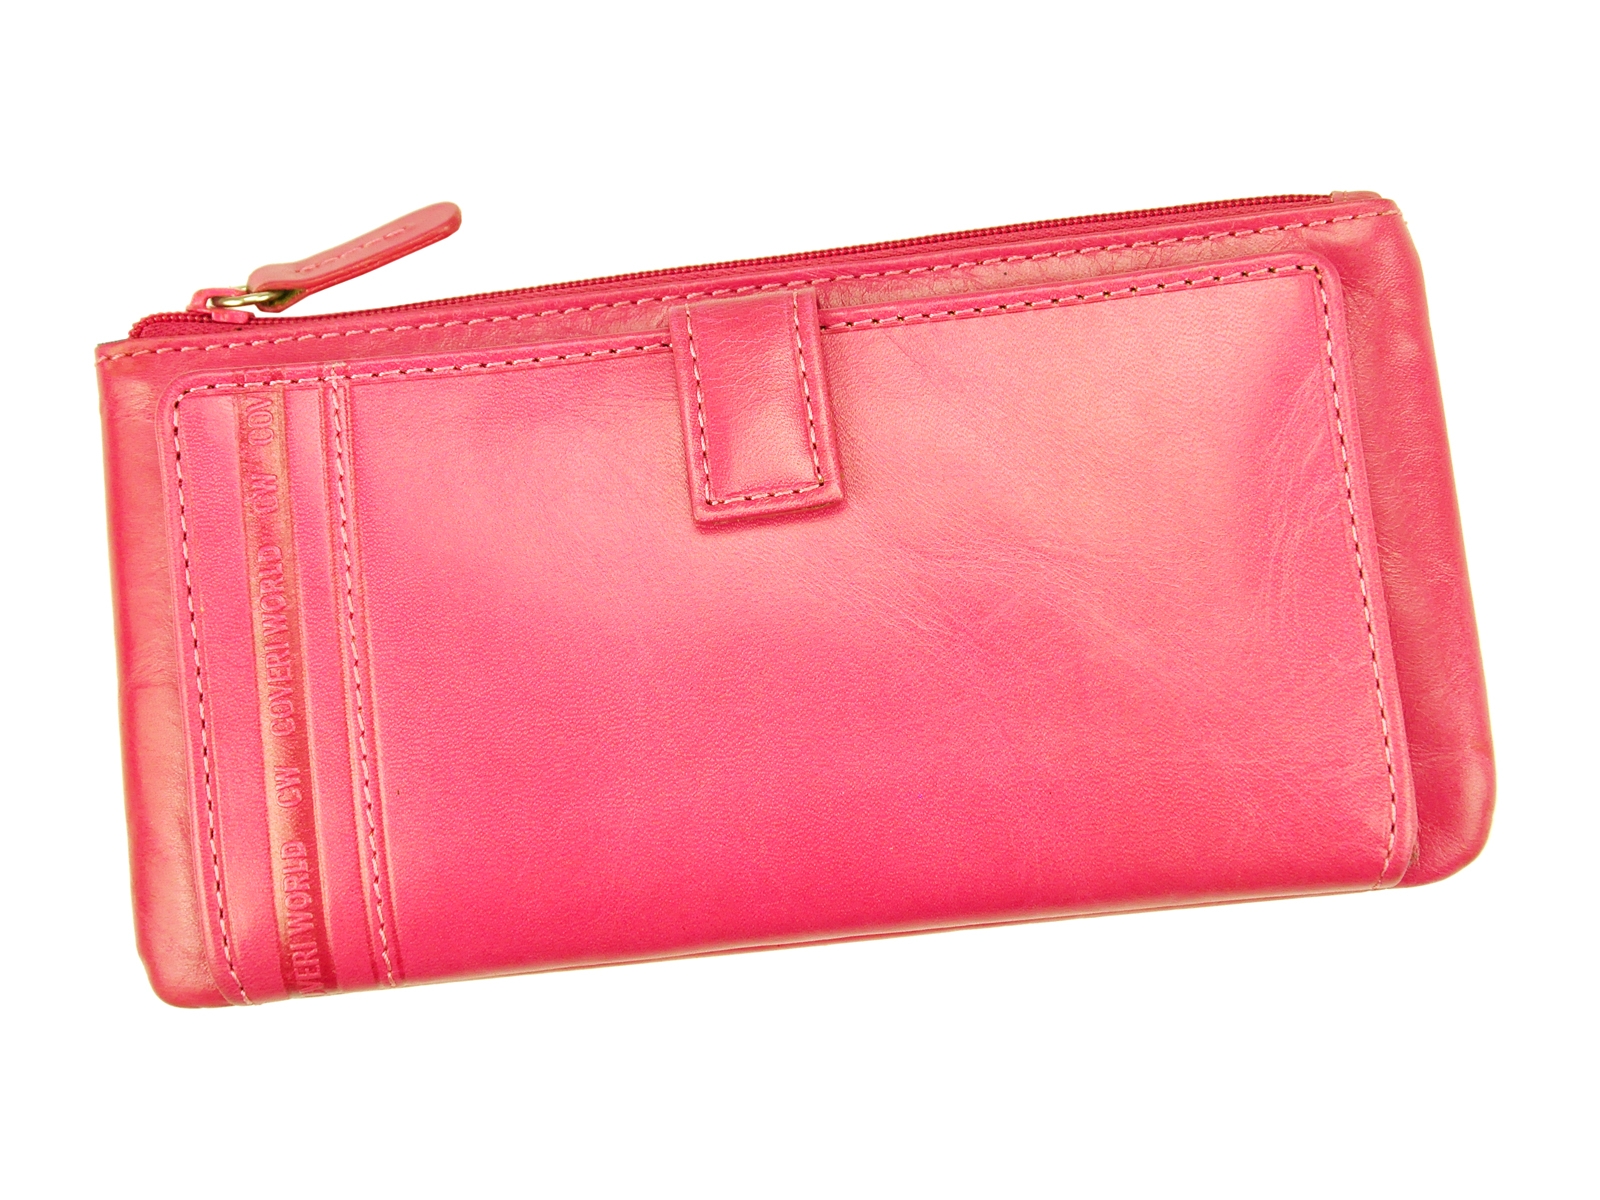 Coveri World Soft Genuine Leather Women Wallet/Purse Pink 518 G02 – 0